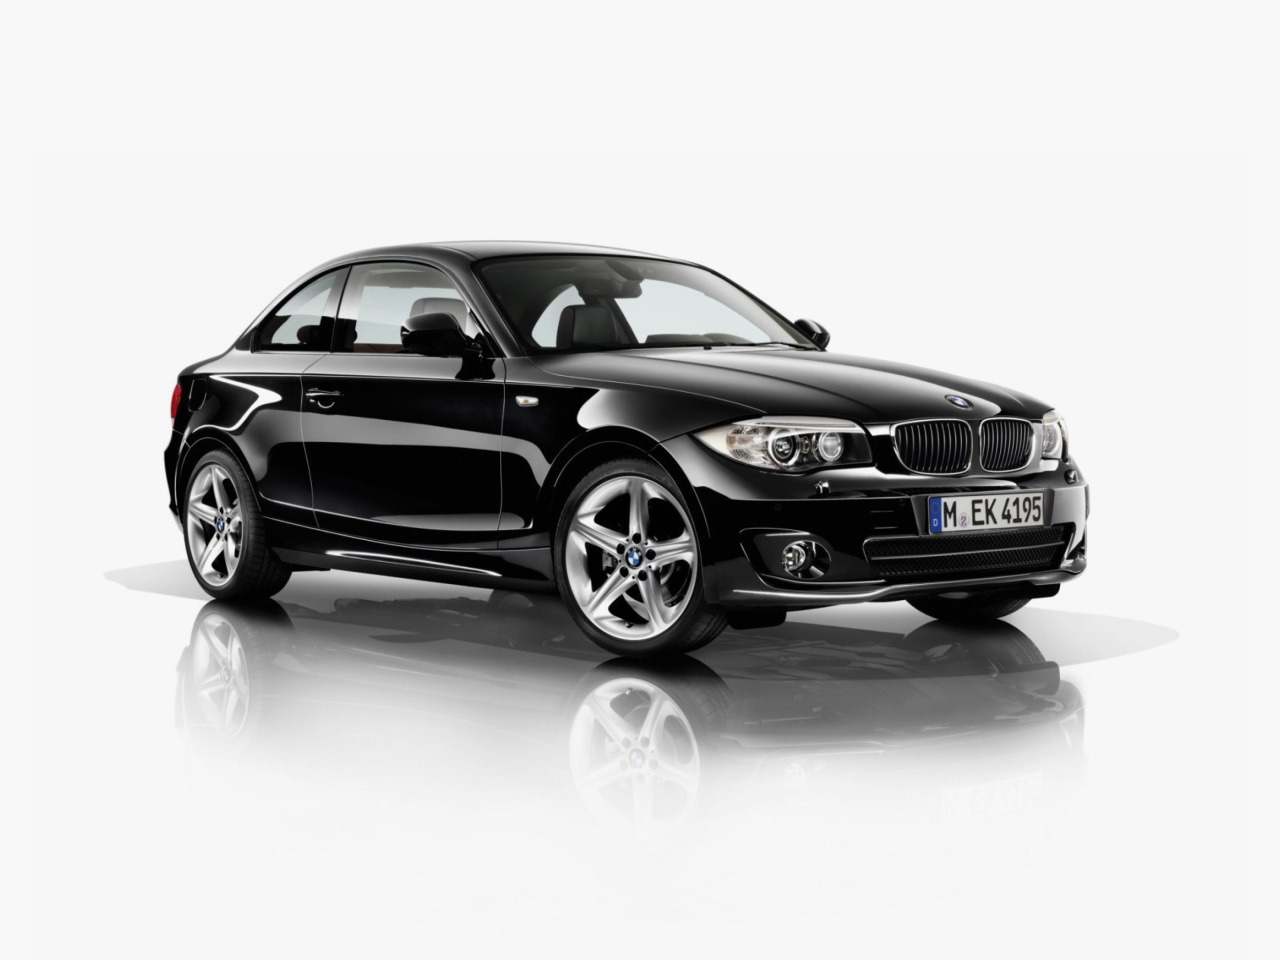 BMW 125i black Coupe wallpaper 1280x960